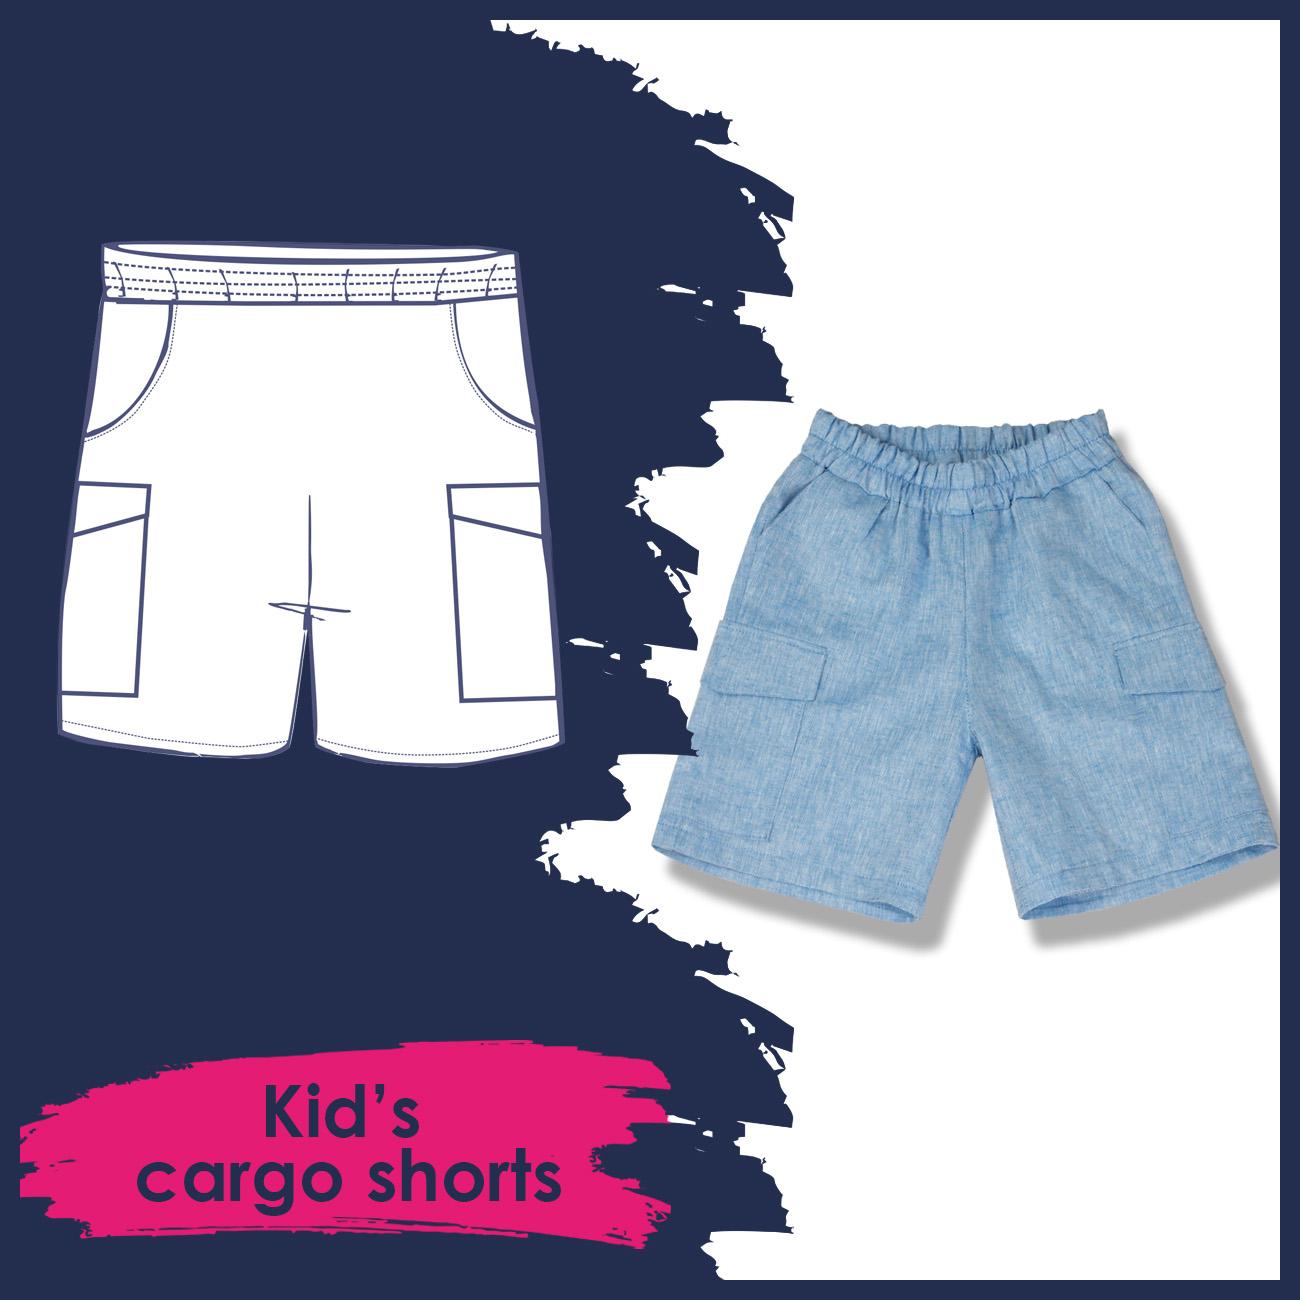 Kid's cargo shorts